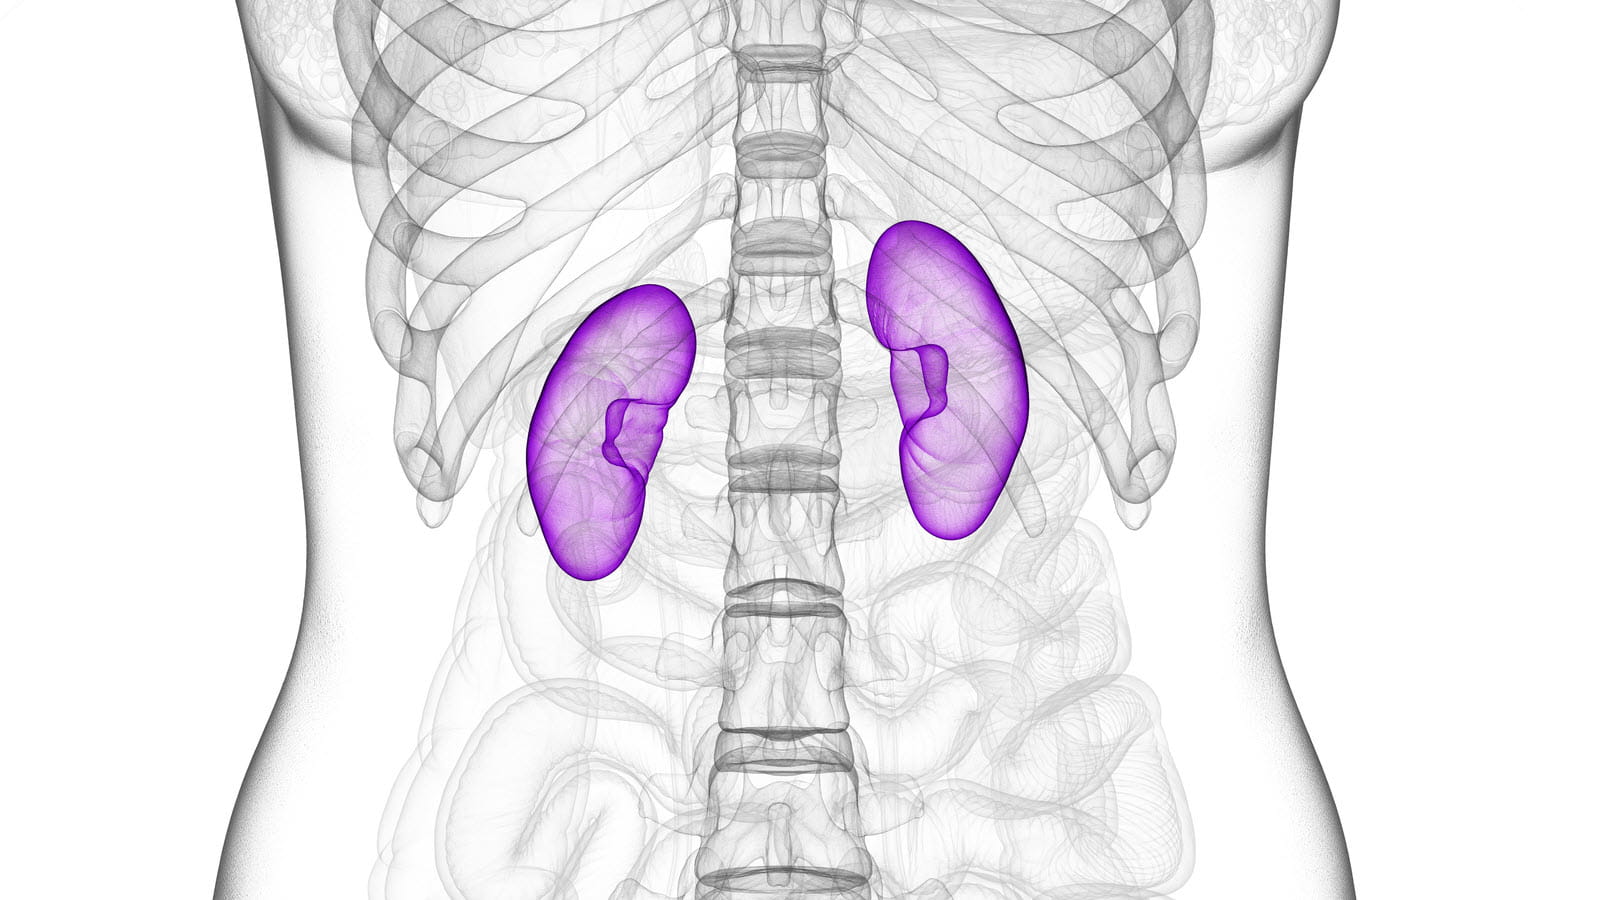 Image of the abdomen showing kidneys